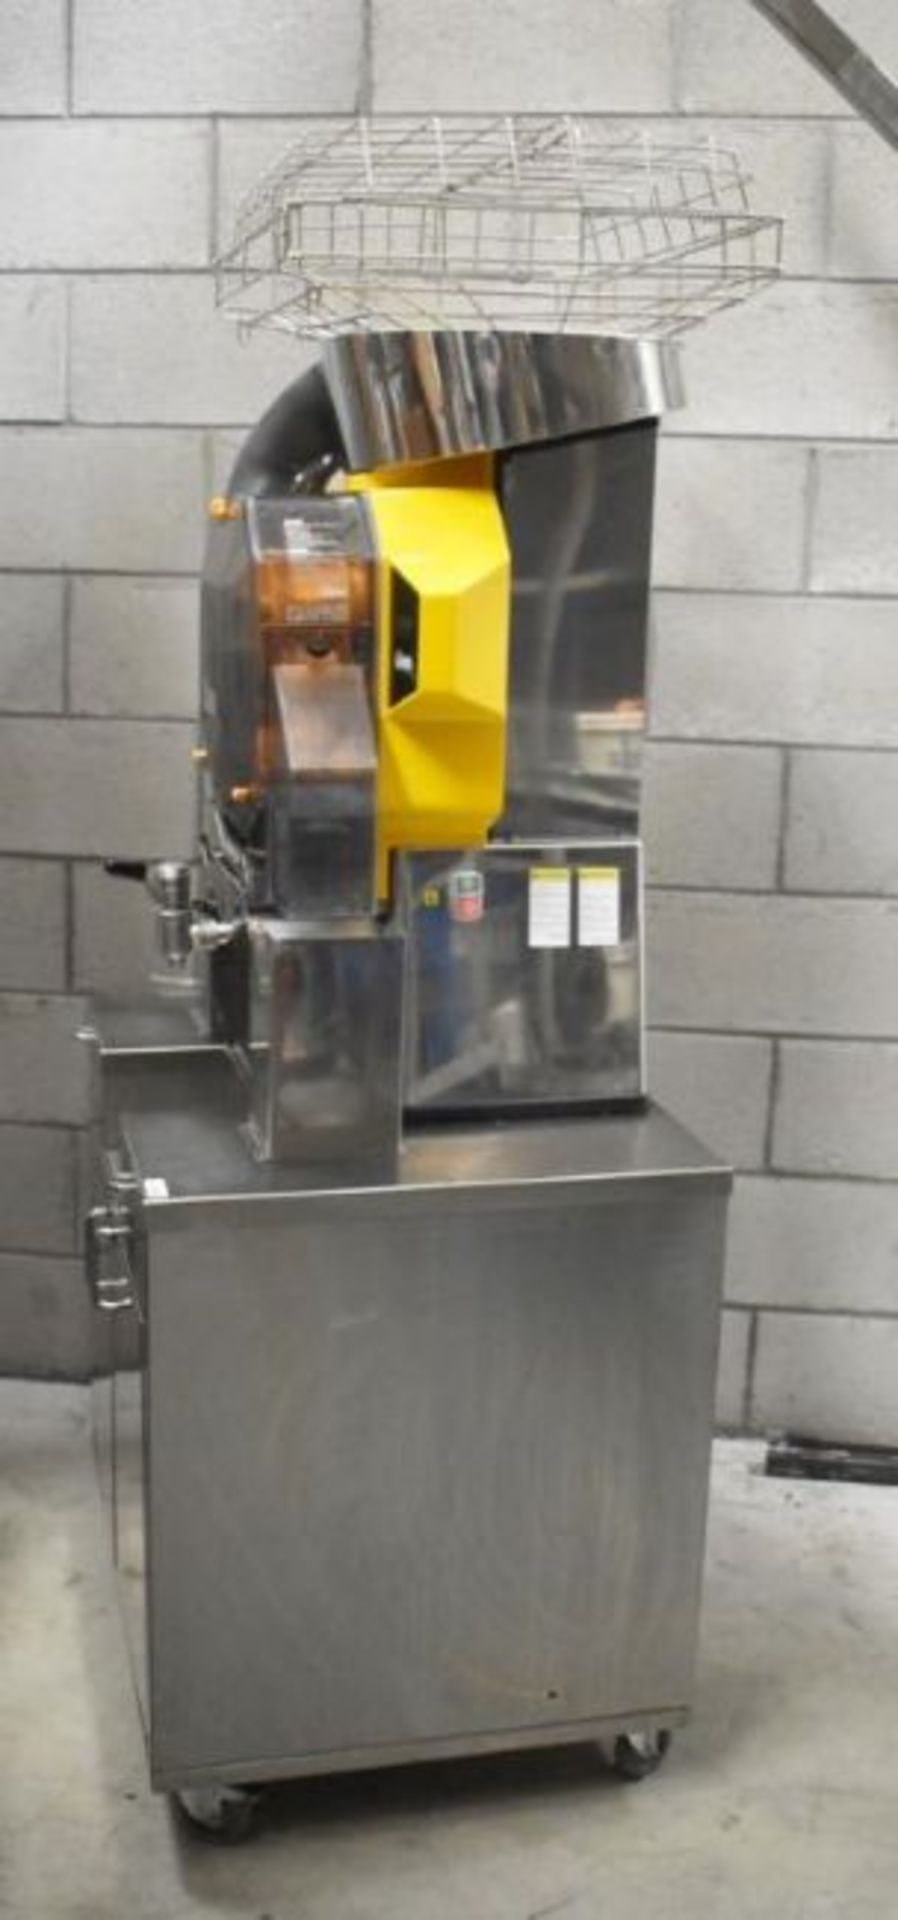 1 x Zumex Speed S +Plus Self-Service Podium Commercial Citrus Juicer - Manufactured in 2018 - Image 5 of 14